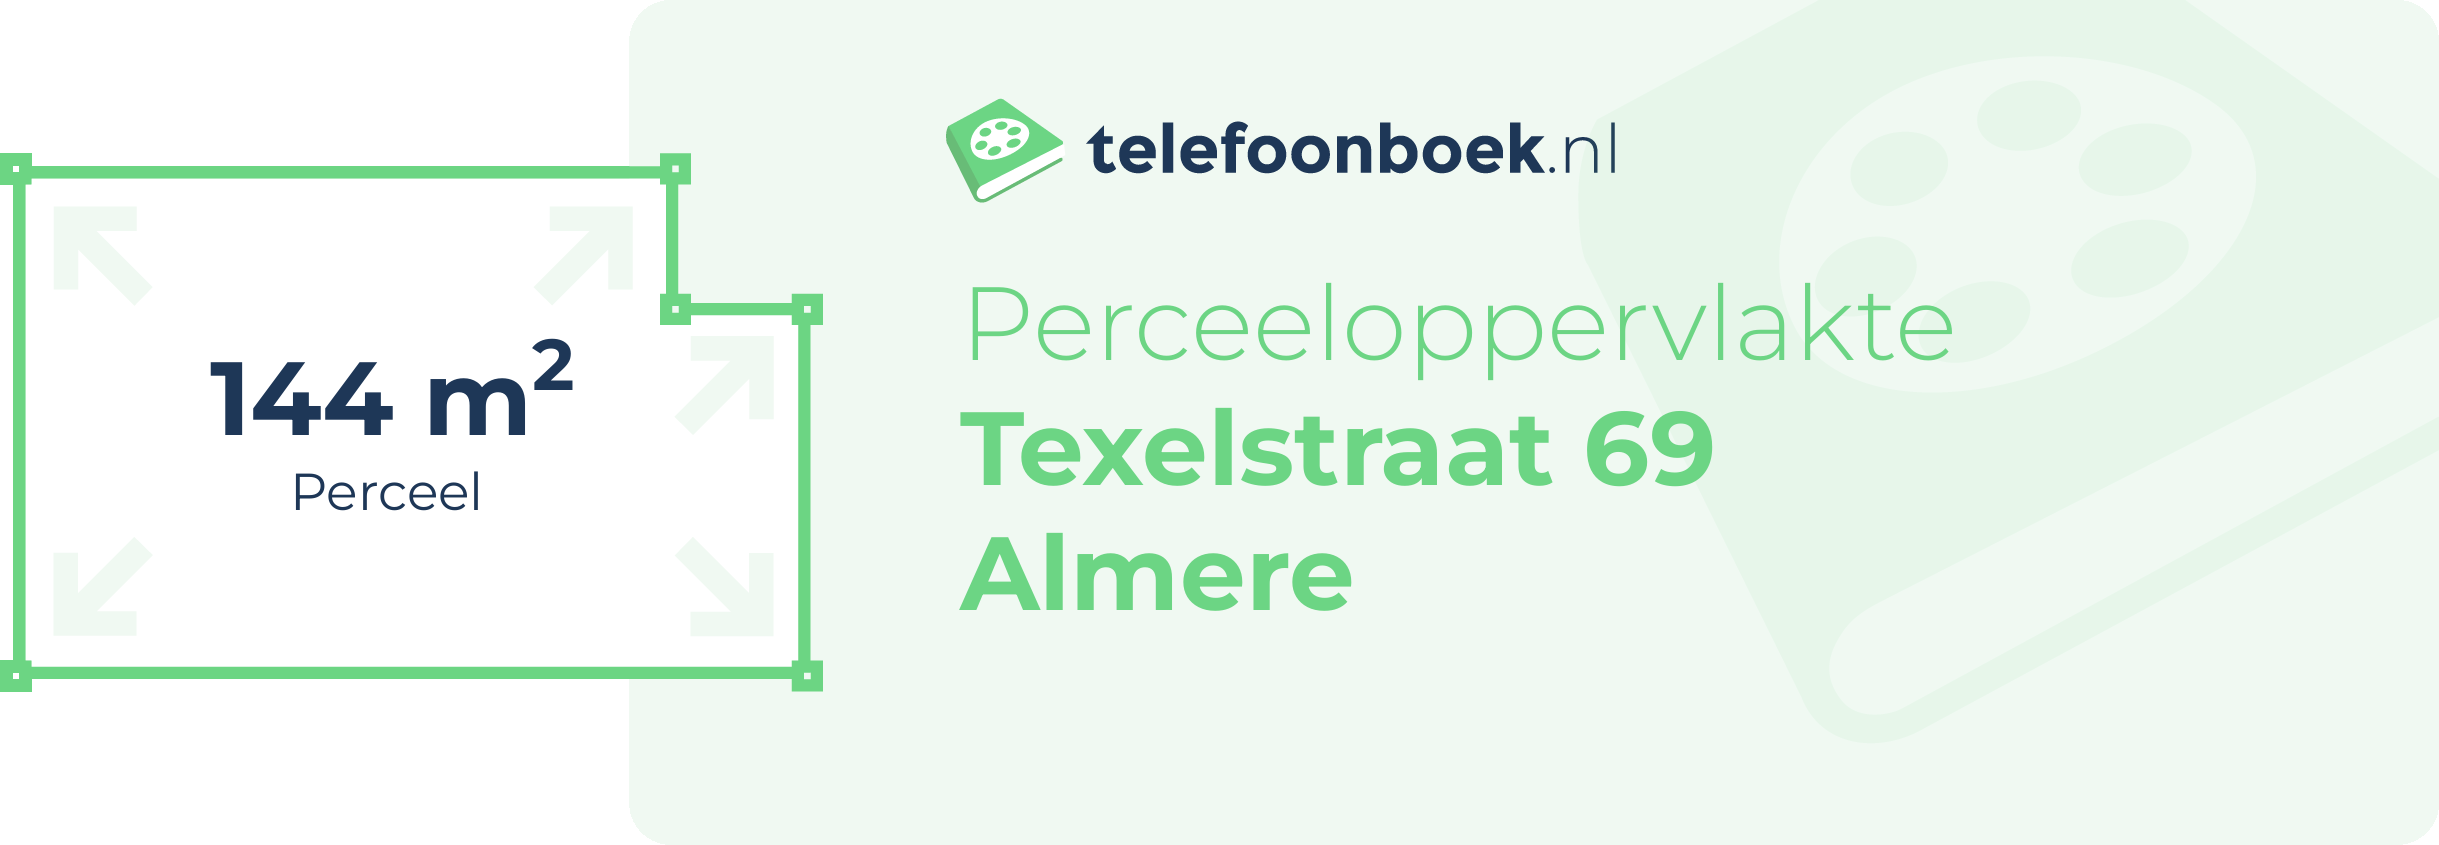 Perceeloppervlakte Texelstraat 69 Almere